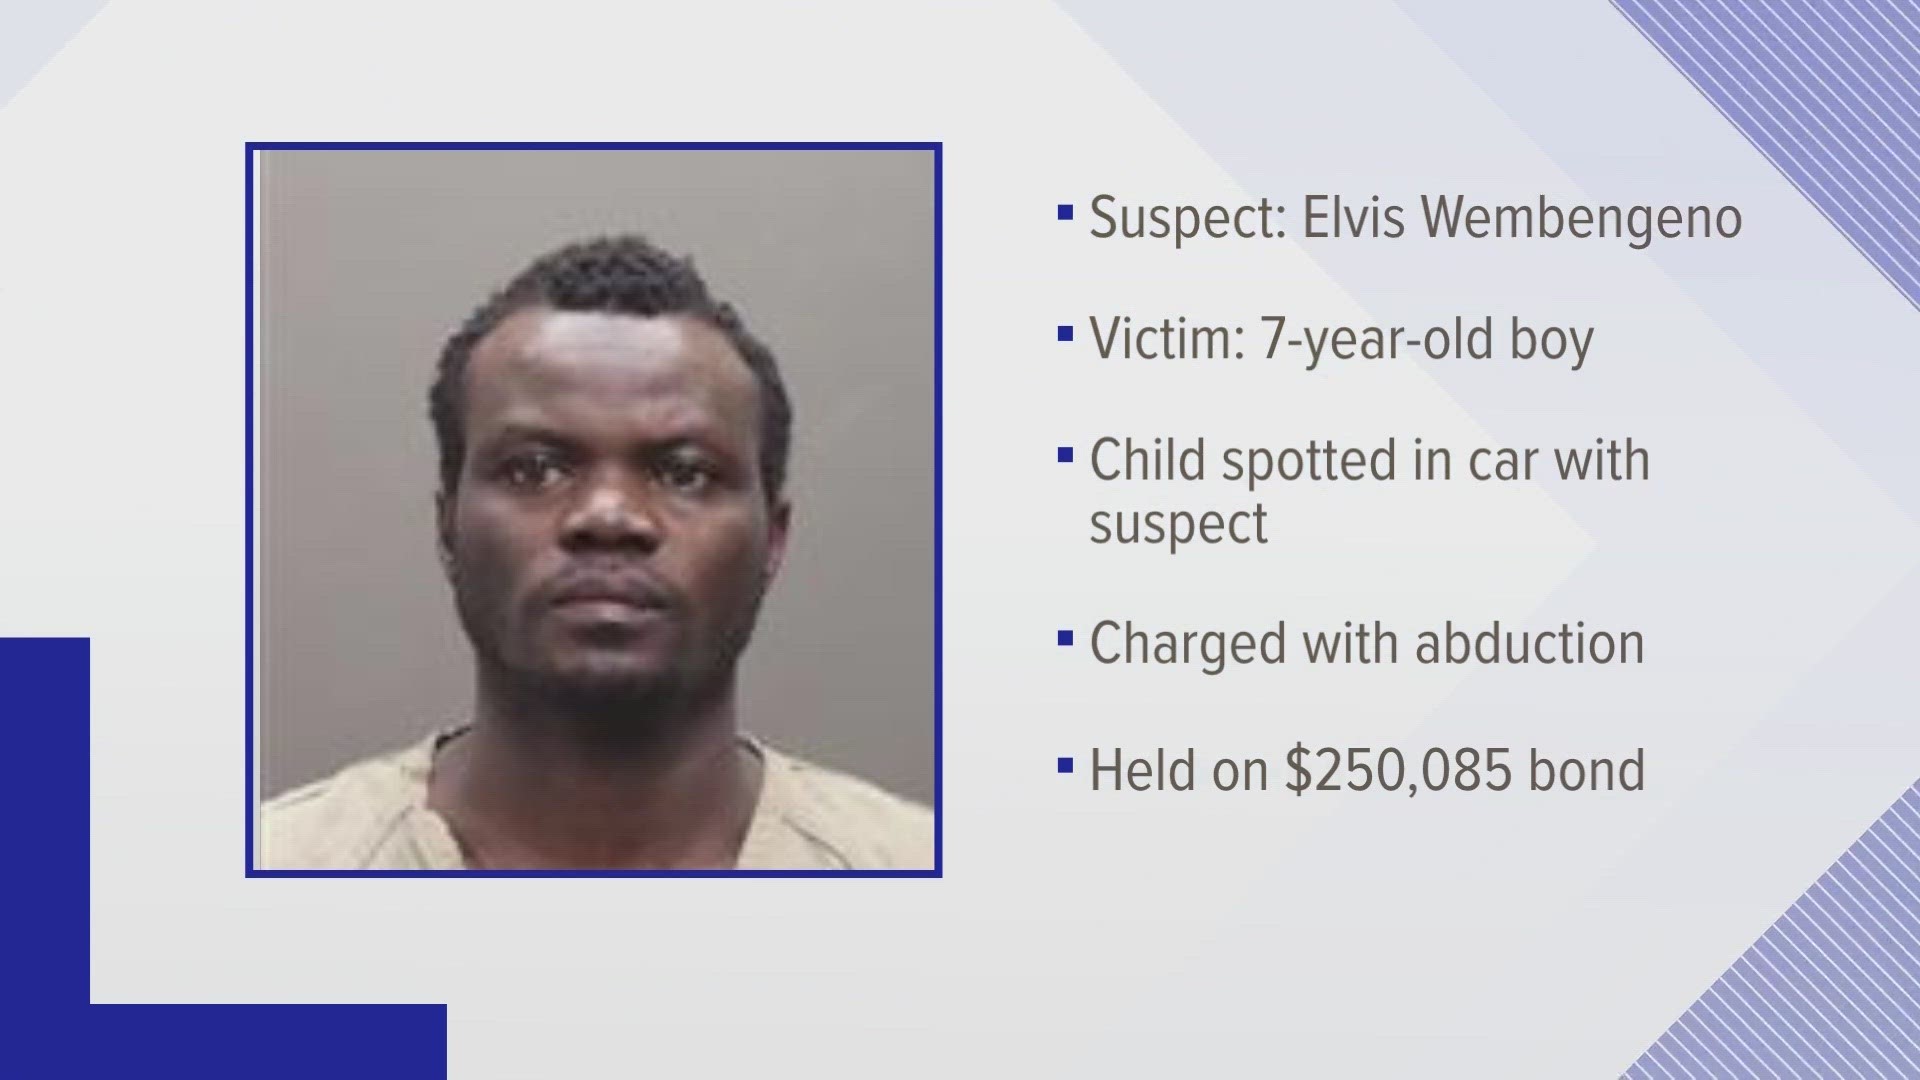 Elvis Wembengeno was held on a $250,000 bond.